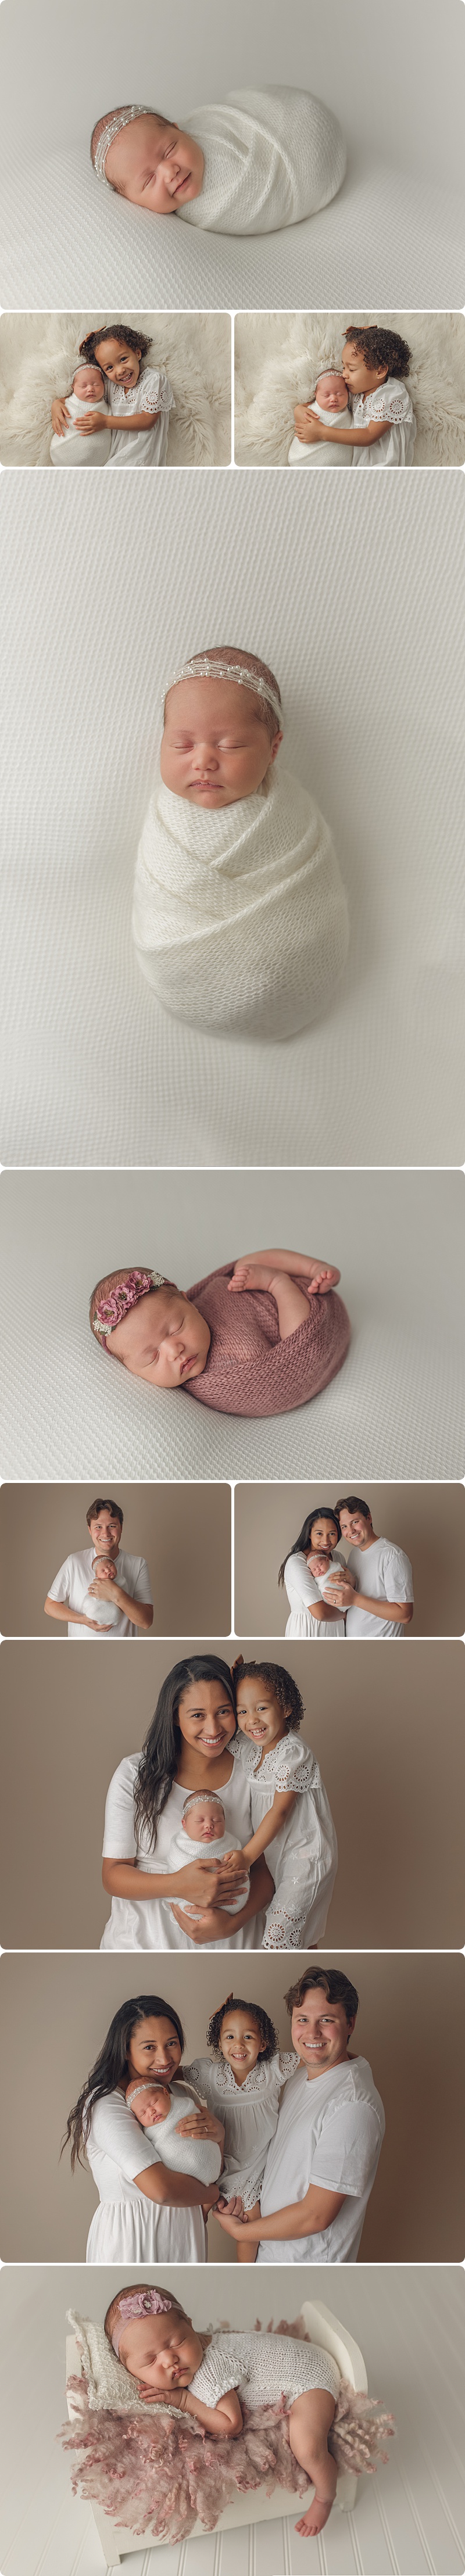 BPPstudio,Beka Price Photography,Salt Lake City Newborn Photographer,Utah Newborn Photographer,baby girl,bppbabies,newborn,